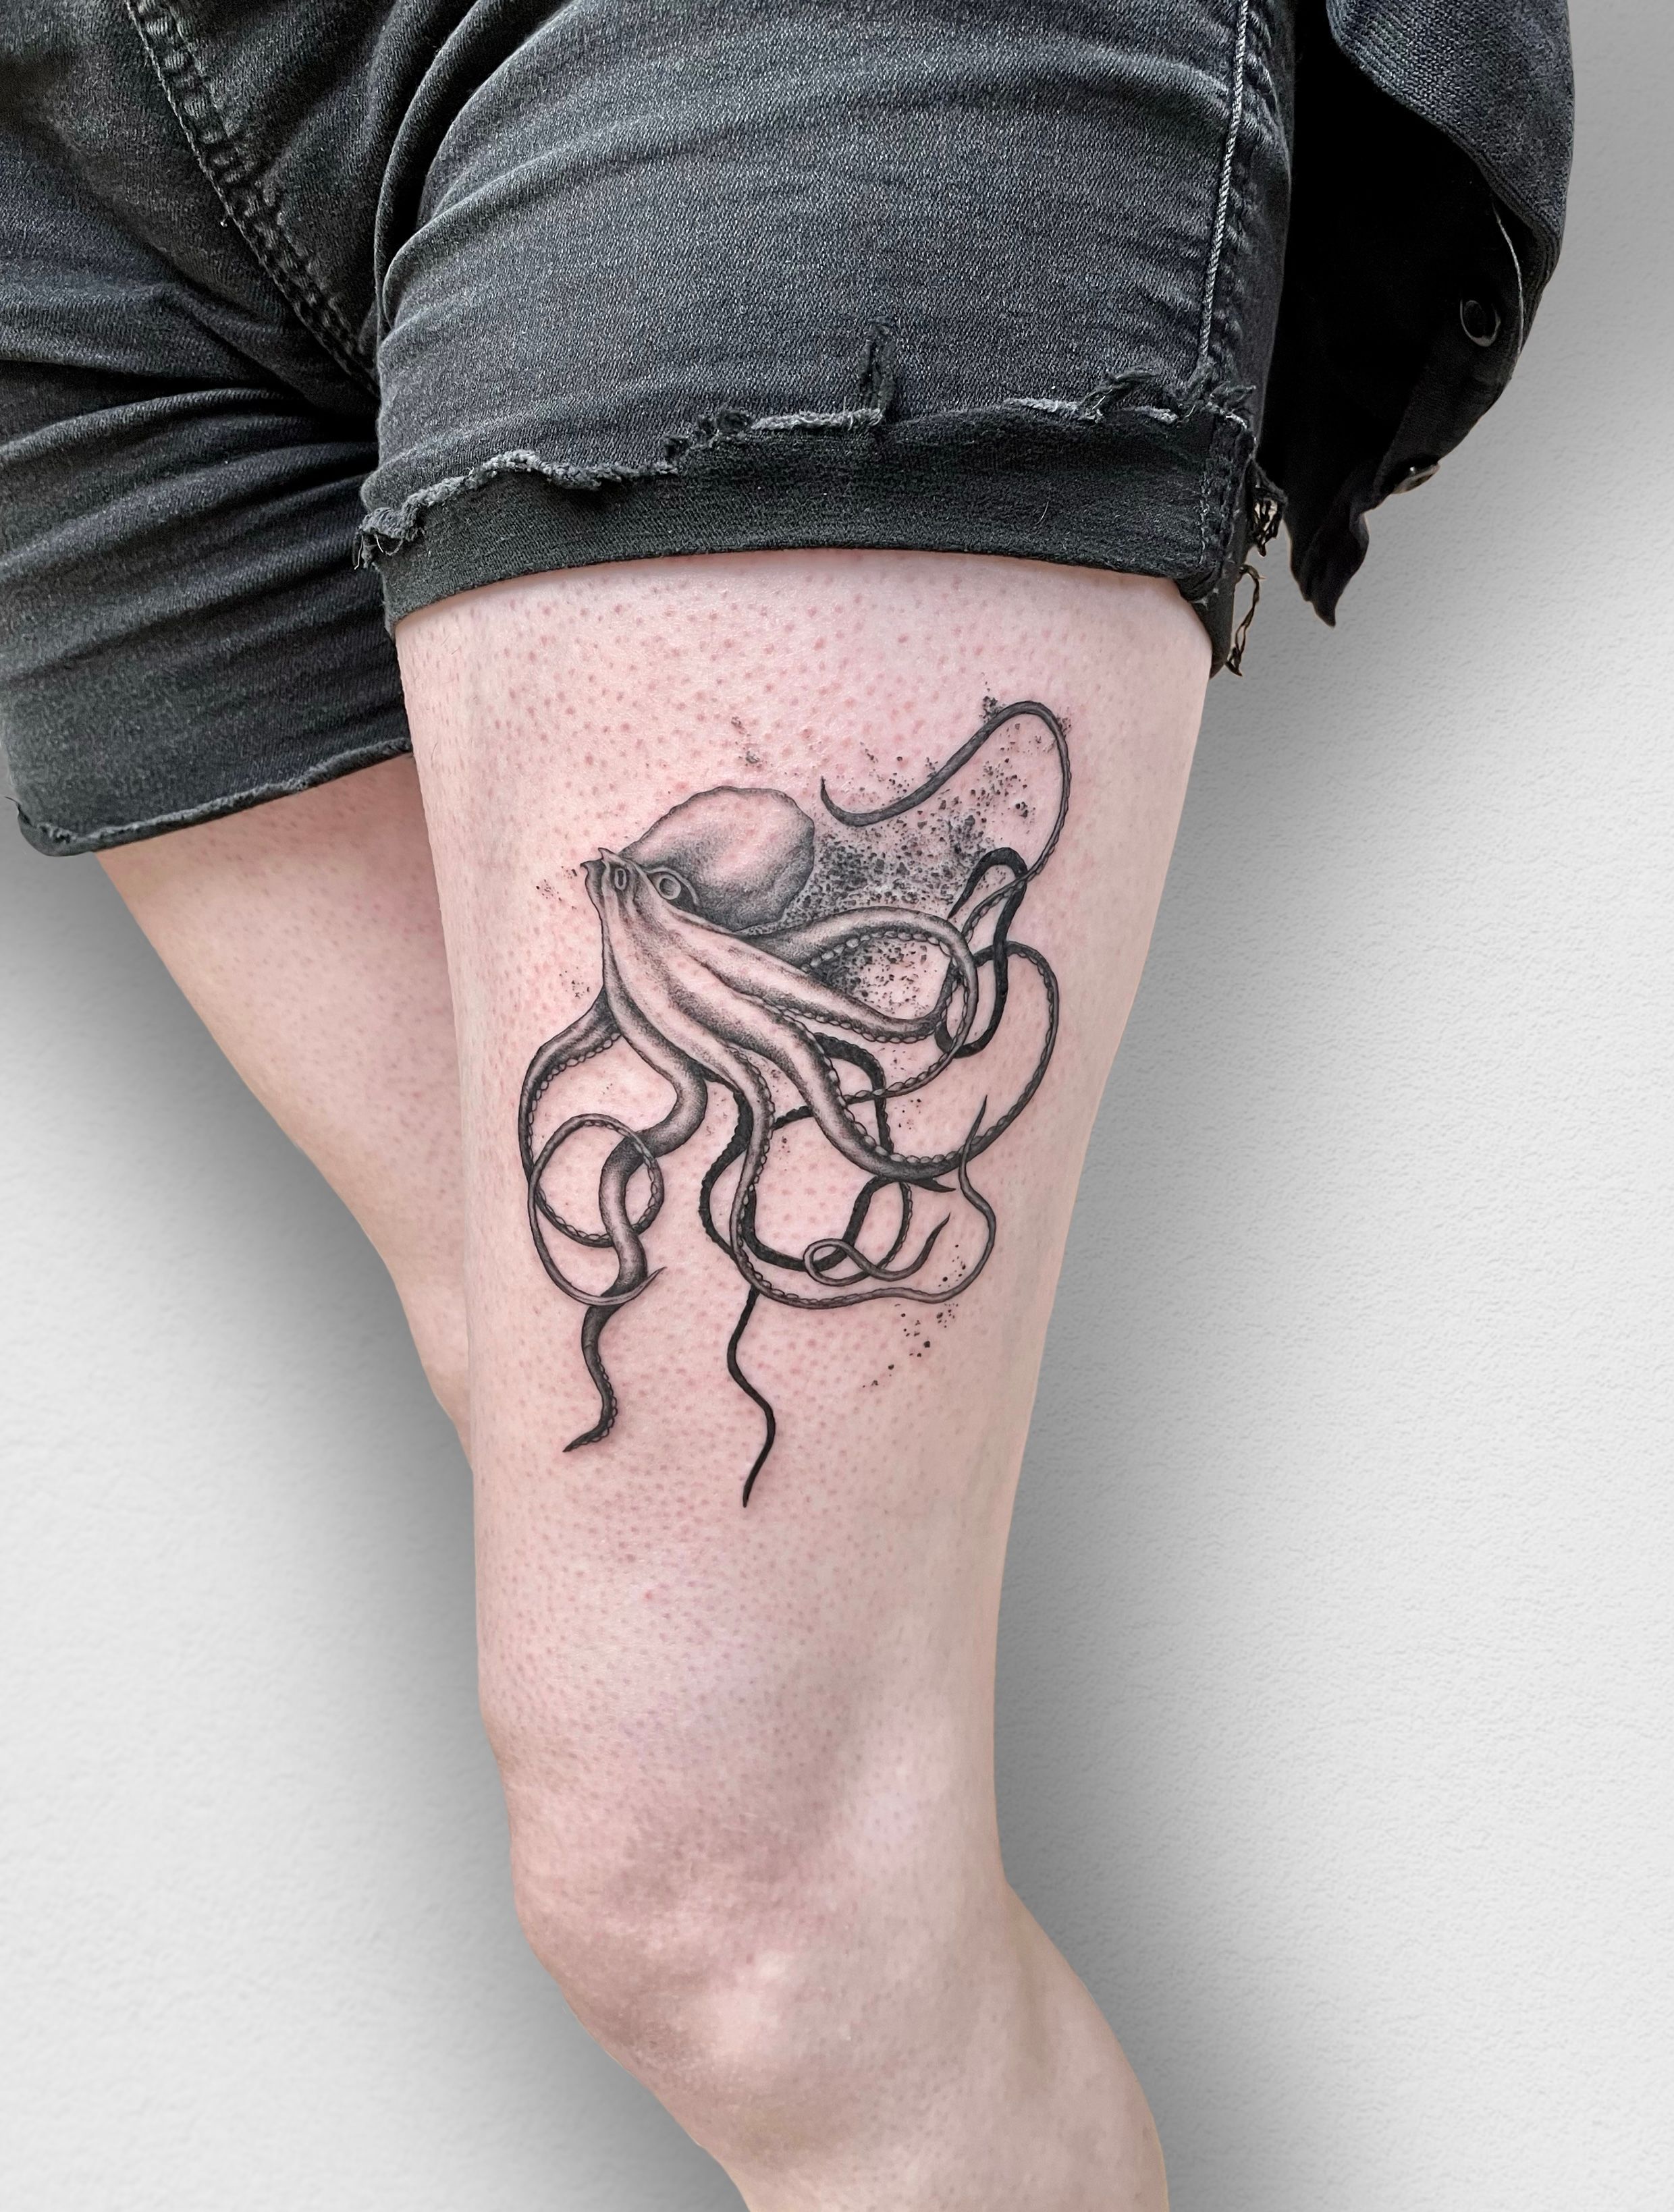 Octopus tattoo on thigh by Alex Tabuns  rtattoo